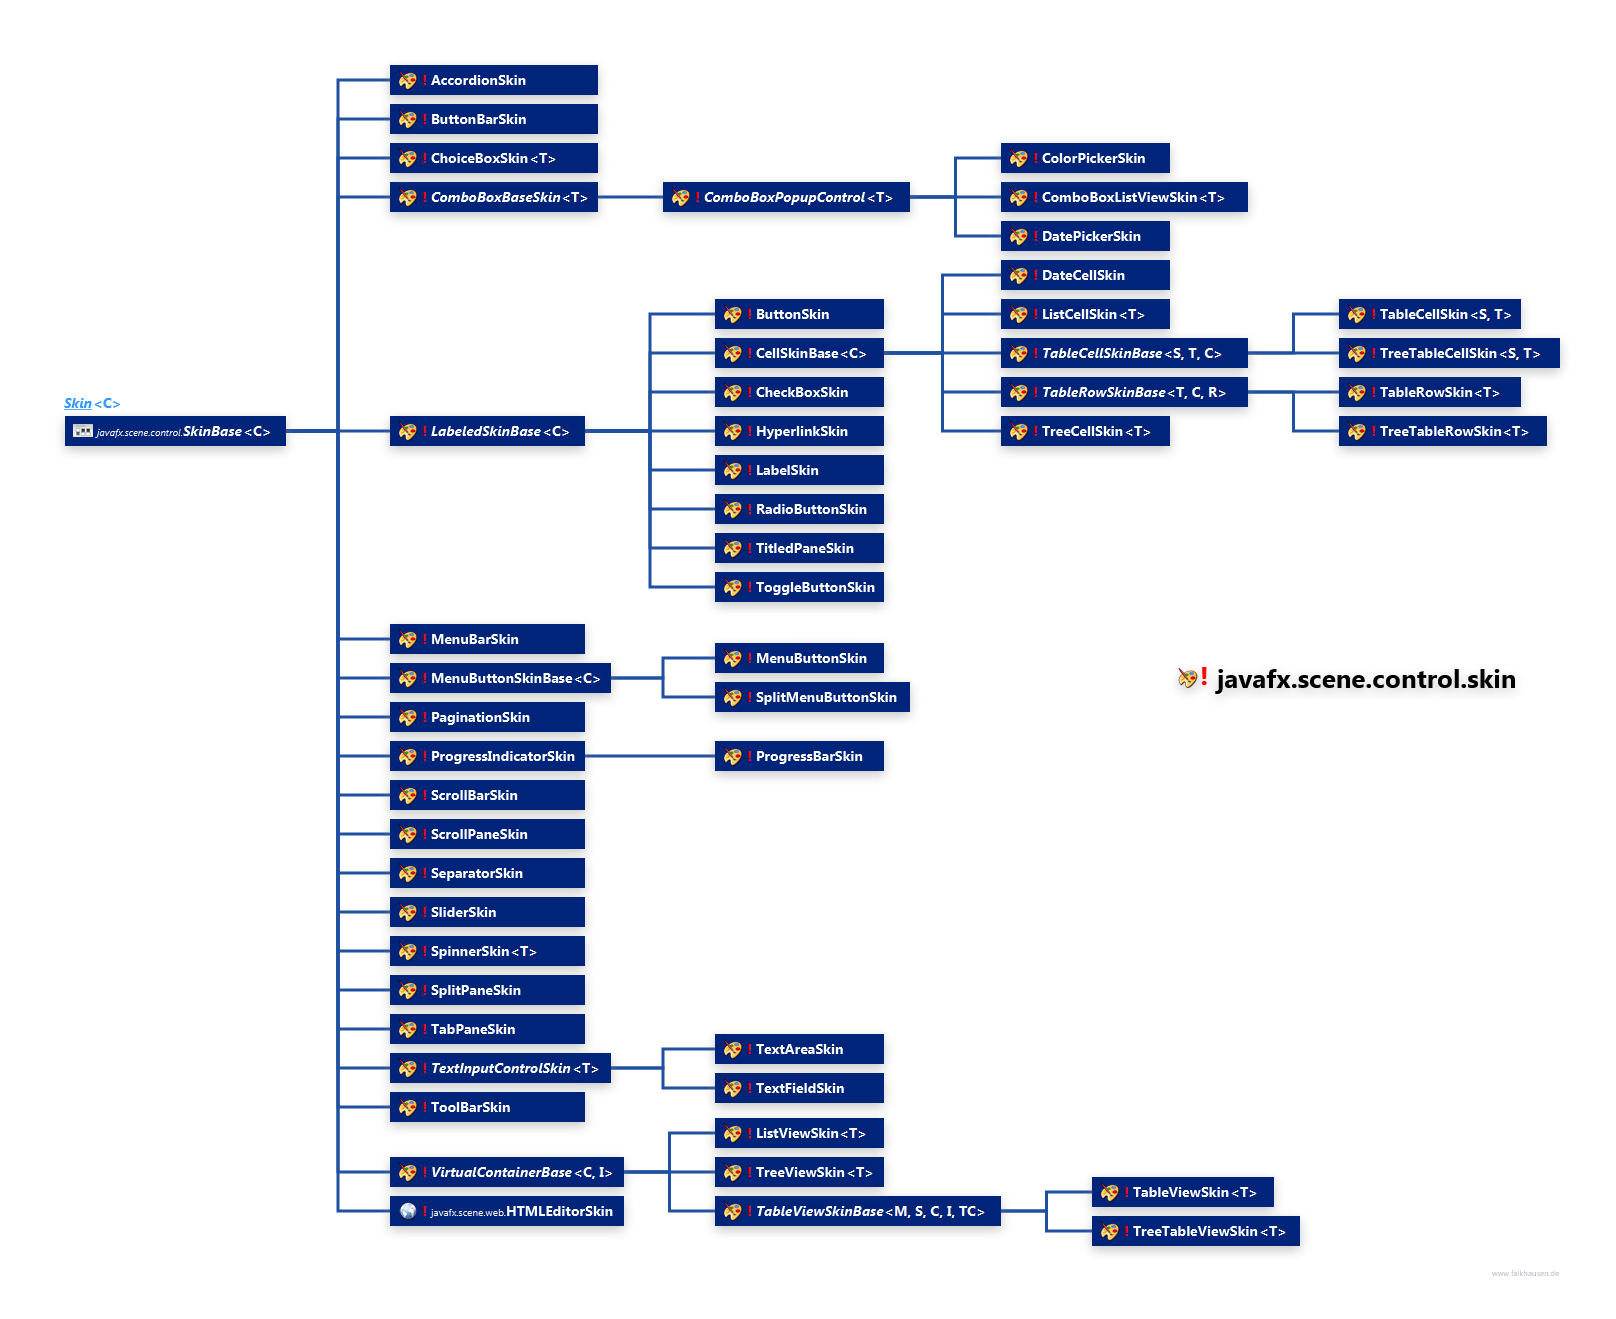 javafx.scene.control.skin Skin Hierarchy class diagram and api documentation for JavaFX 10